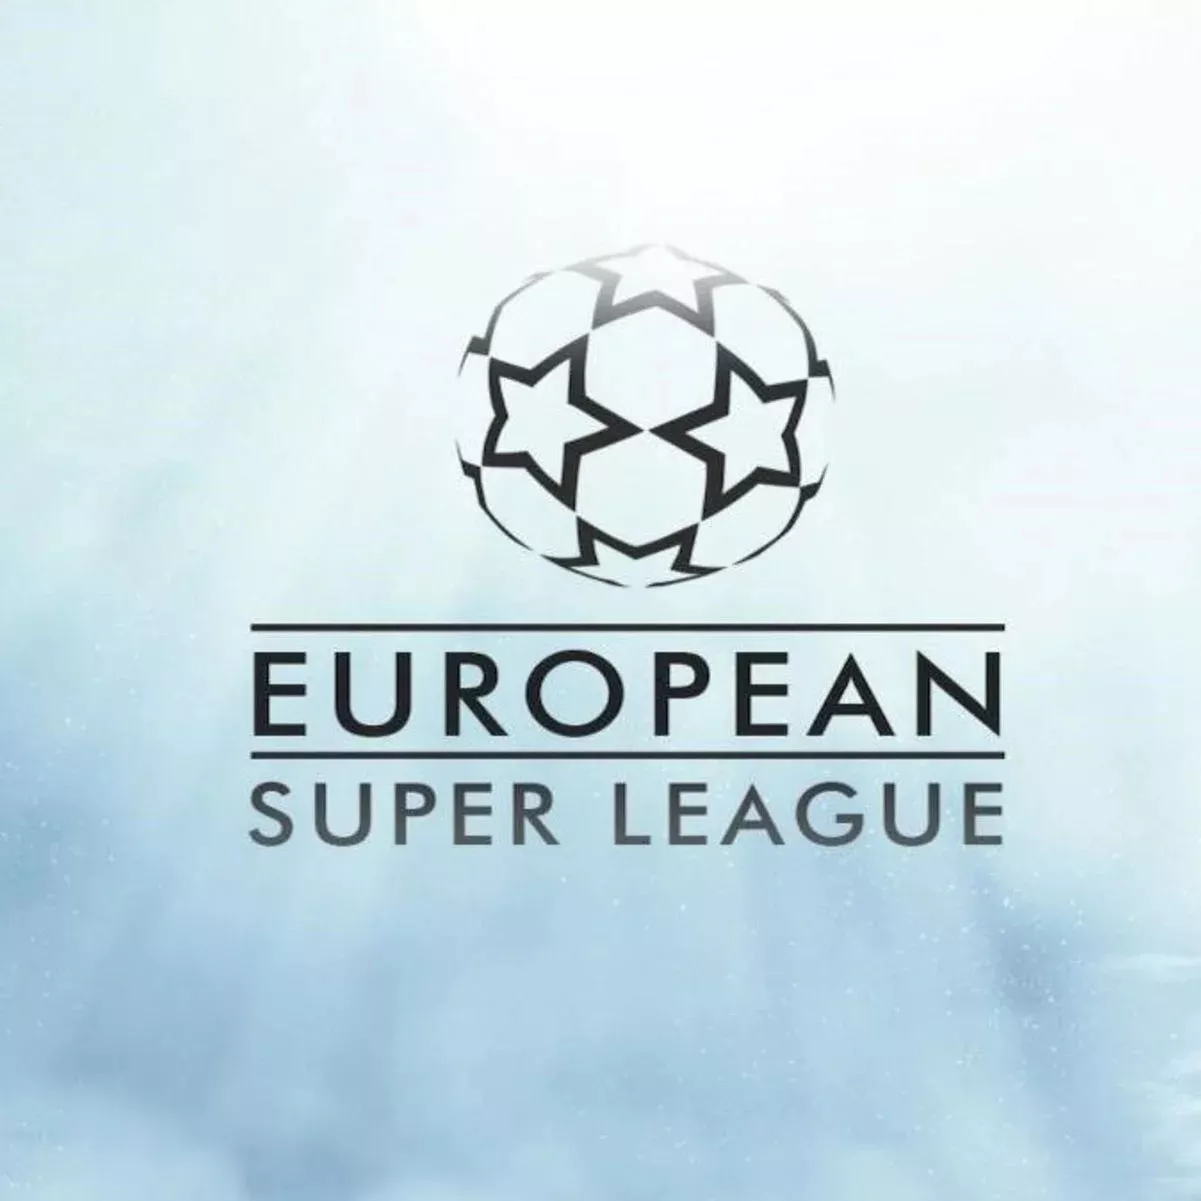 Fotka przedstawiająca logo European Super League